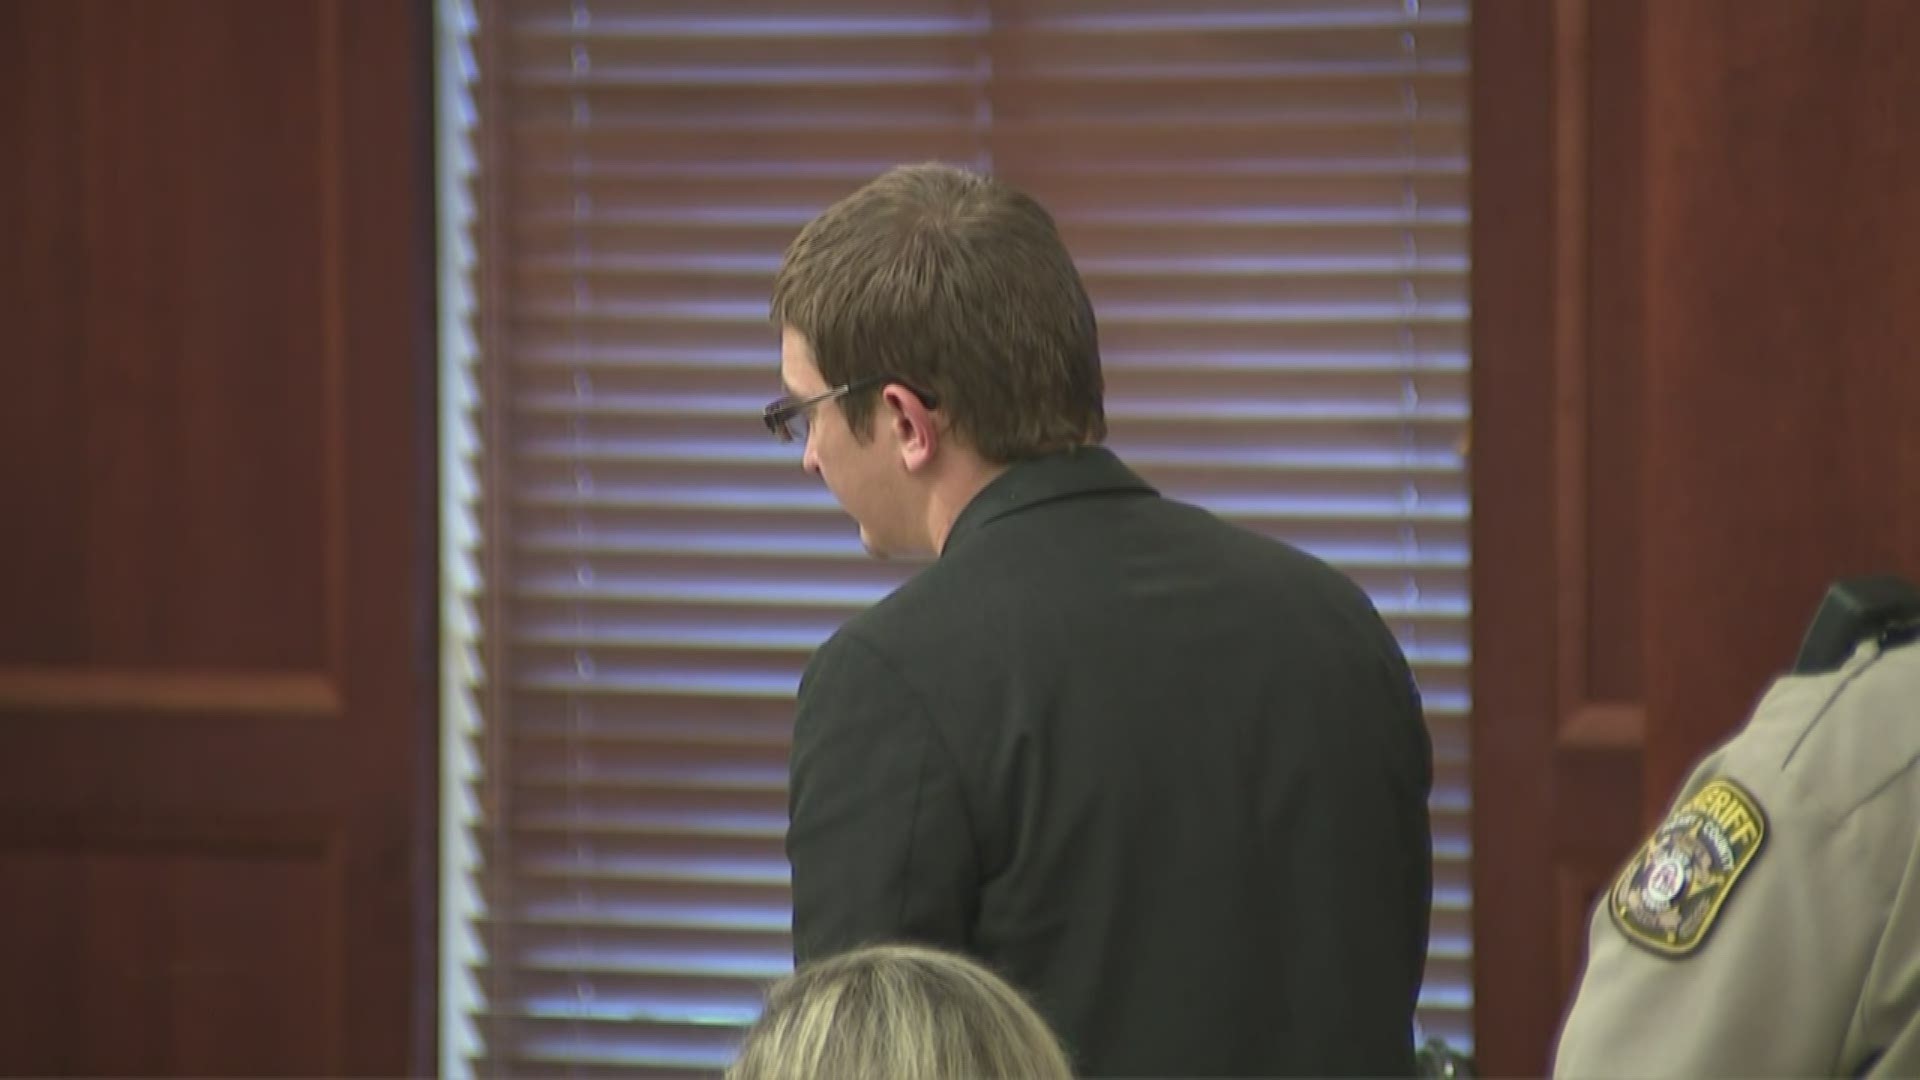 The judge sentenced Joseph Rosenbaum in the death of 2-year-old Laila Daniel. The Rosenbaum trial lasted several weeks.